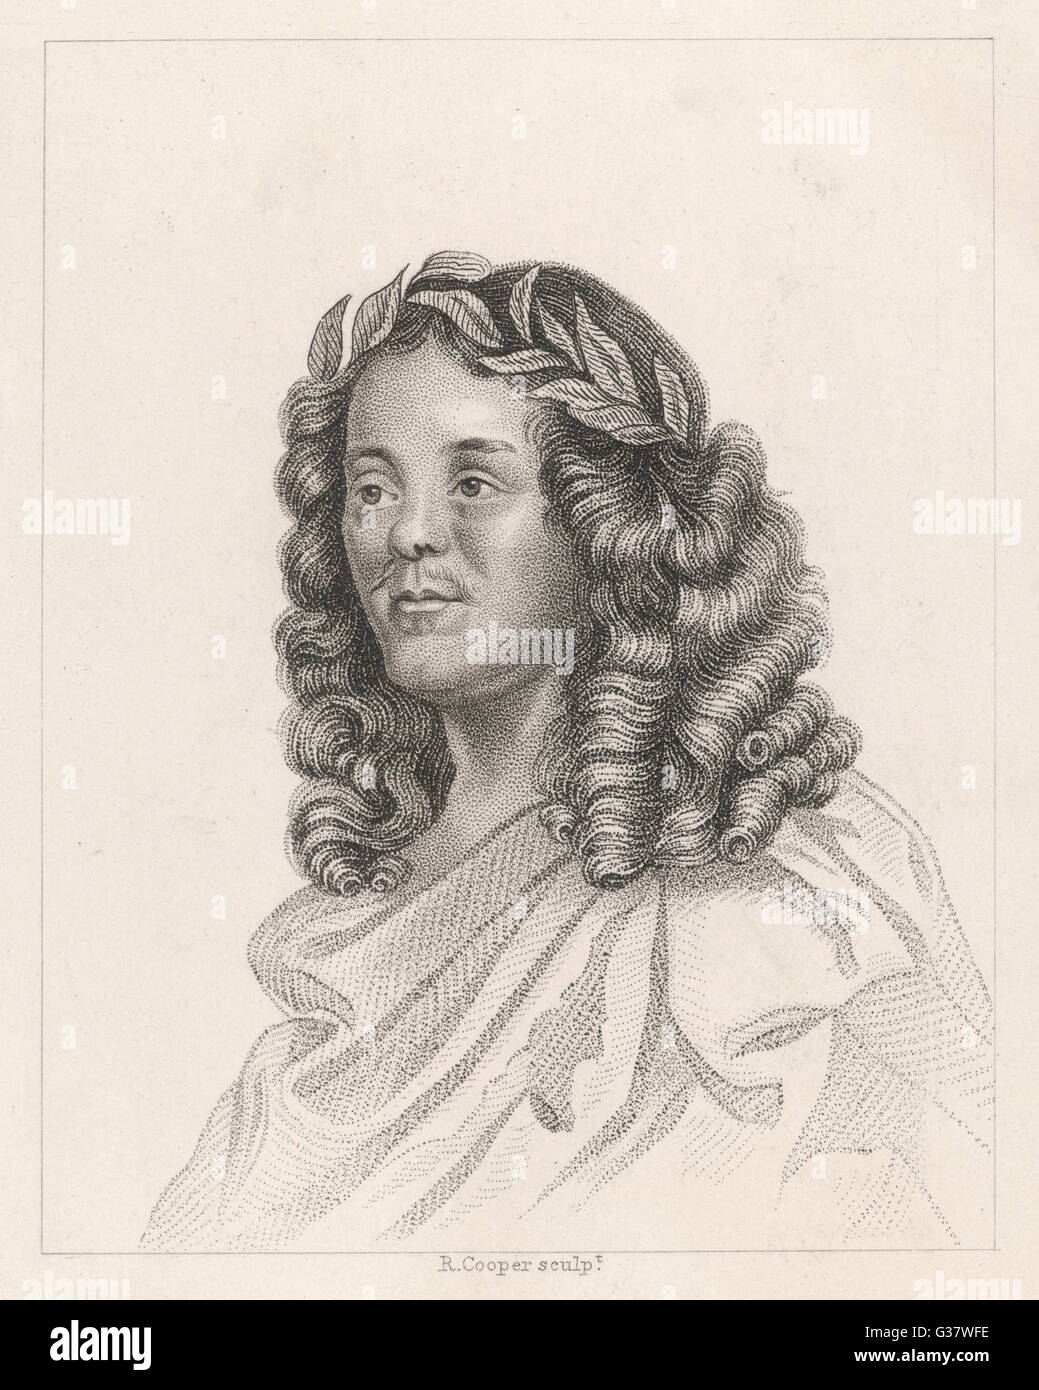 SIR WILLIAM DAVENANT inglese poeta e drammaturgo. Poeta laureato dal 1638. Data: 1606 - 1668 Foto Stock